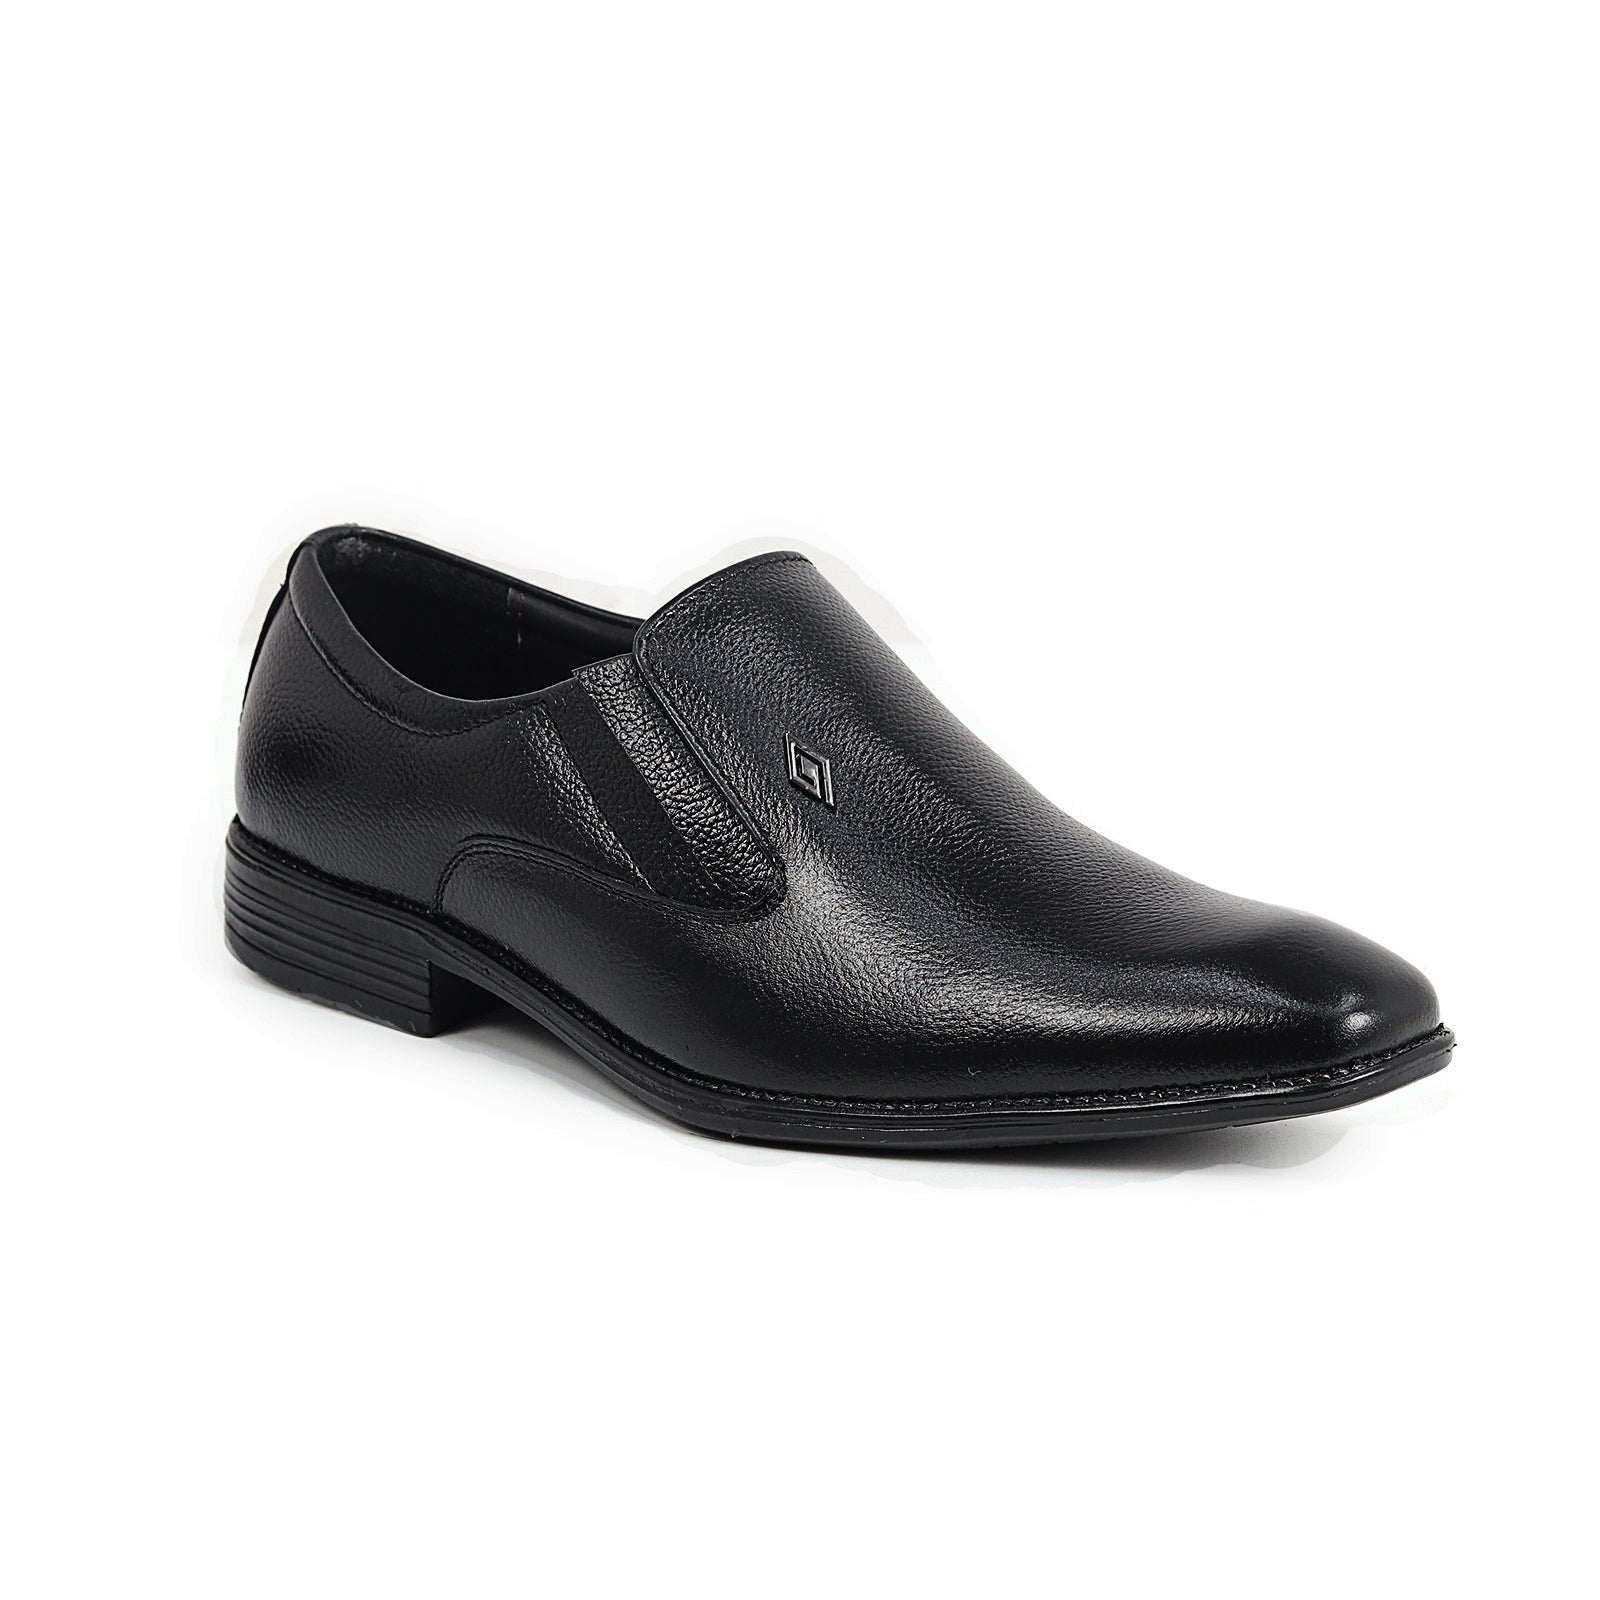 Zays Premium Leather Formal Shoe For Men (Black) - ZAYSSF23